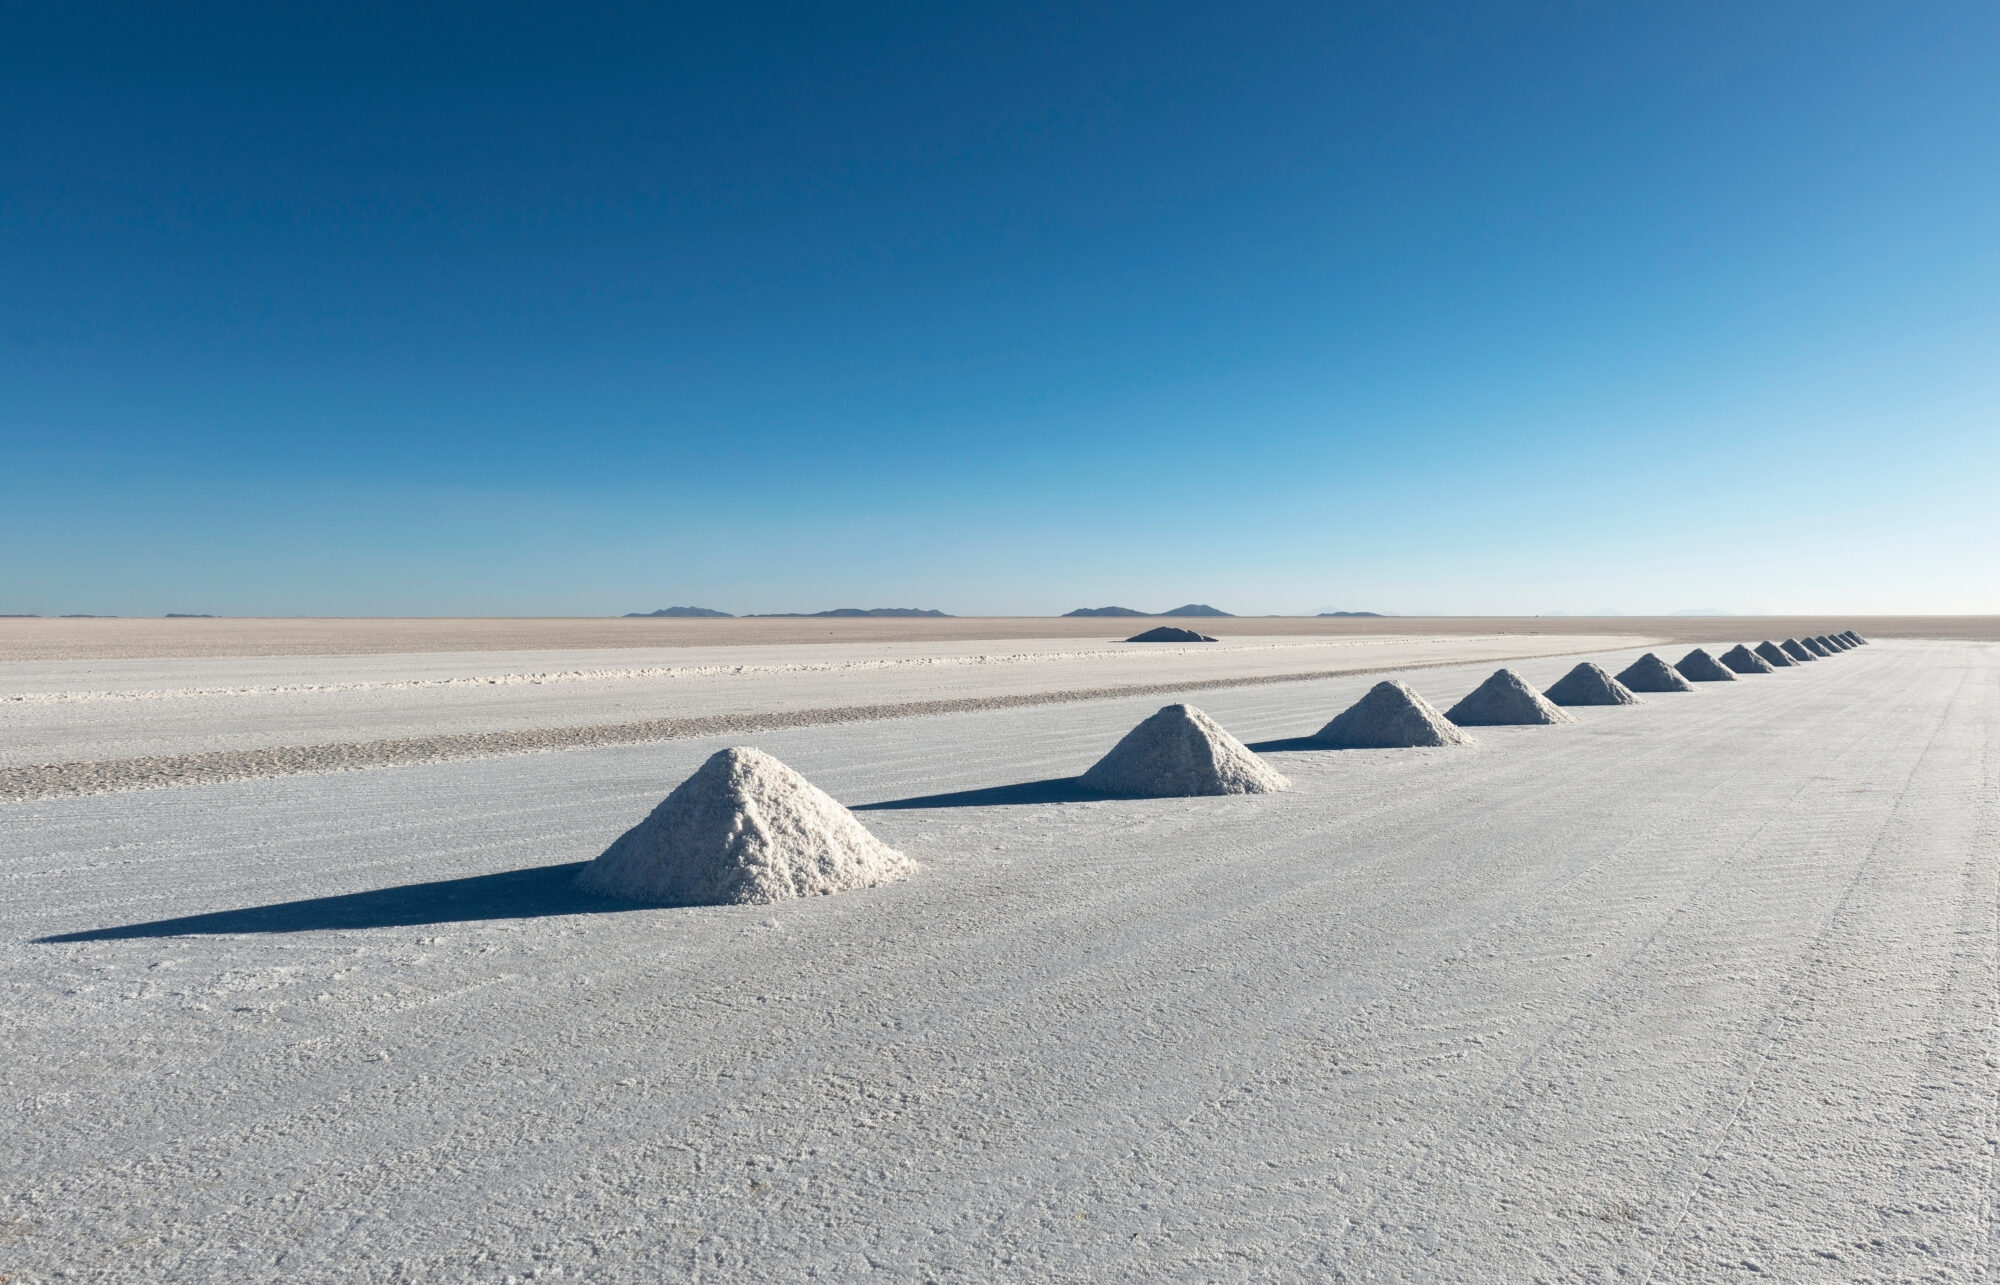 salt pyramids in a salt flat